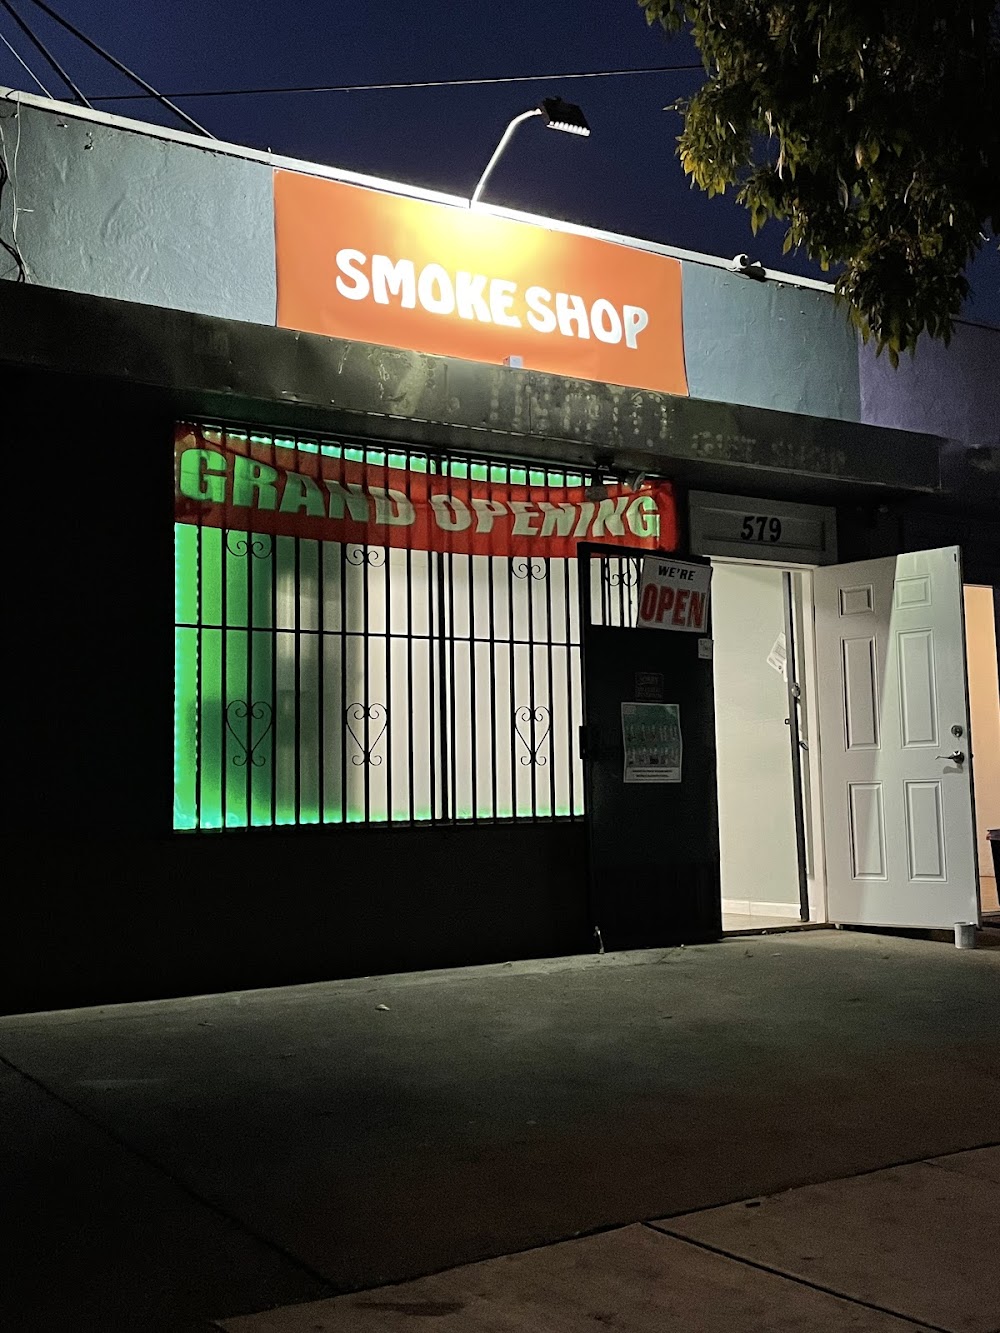 The Hype Smoke Shop